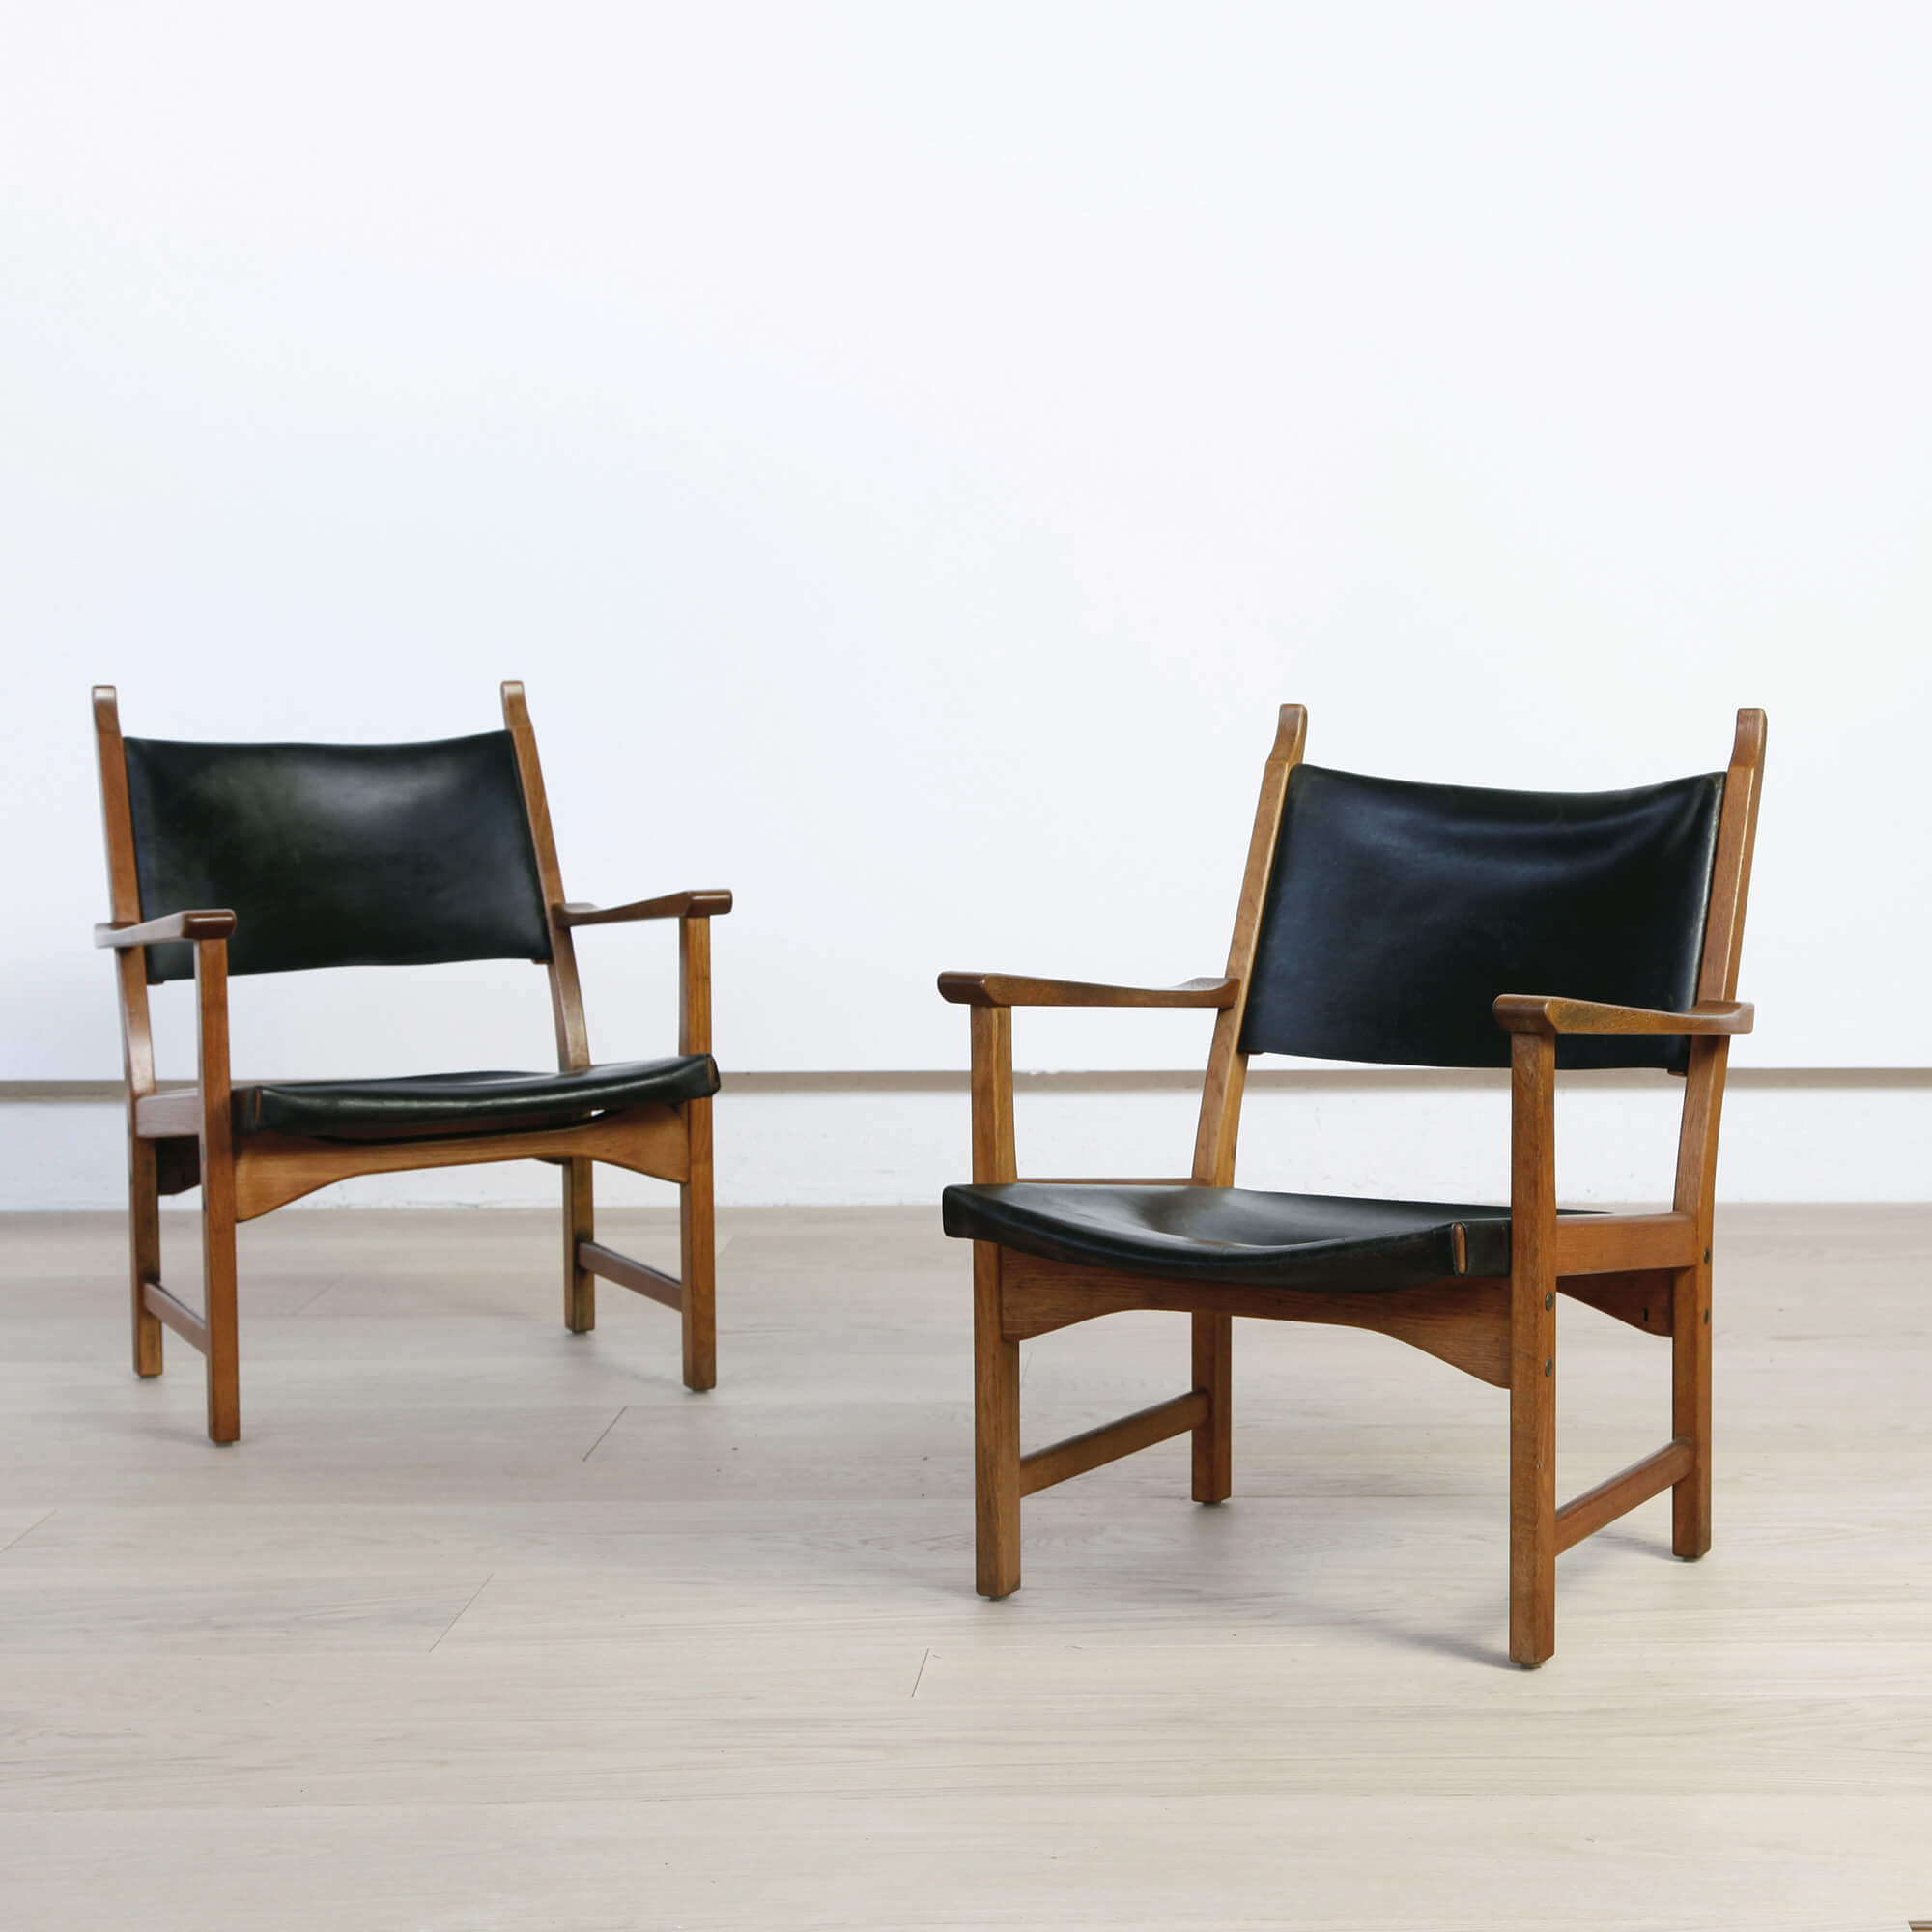 Pair of Caryngo Chairs by Carl Malmsten and Yngve Ekström